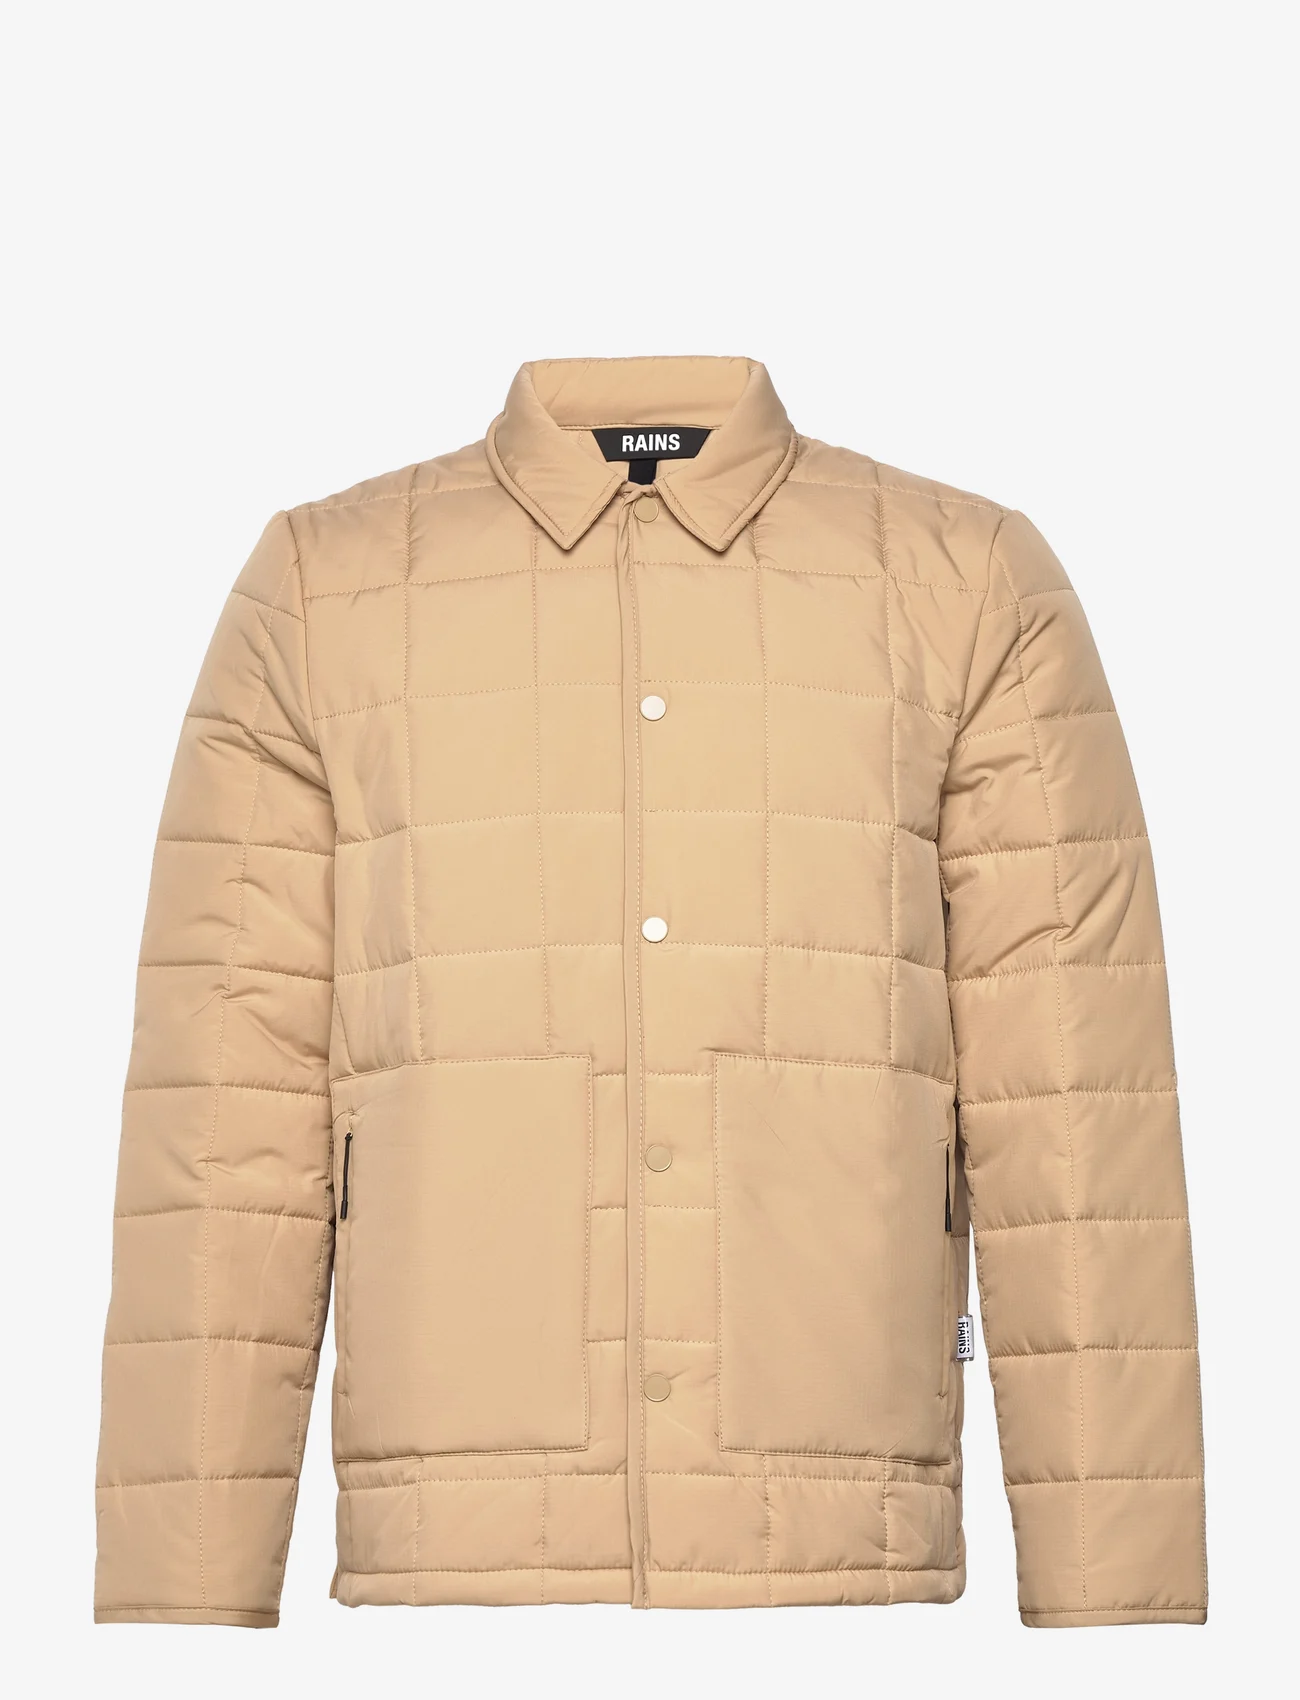 Rains - Liner Shirt Jacket W1T1 - lentejassen - 24 sand - 0